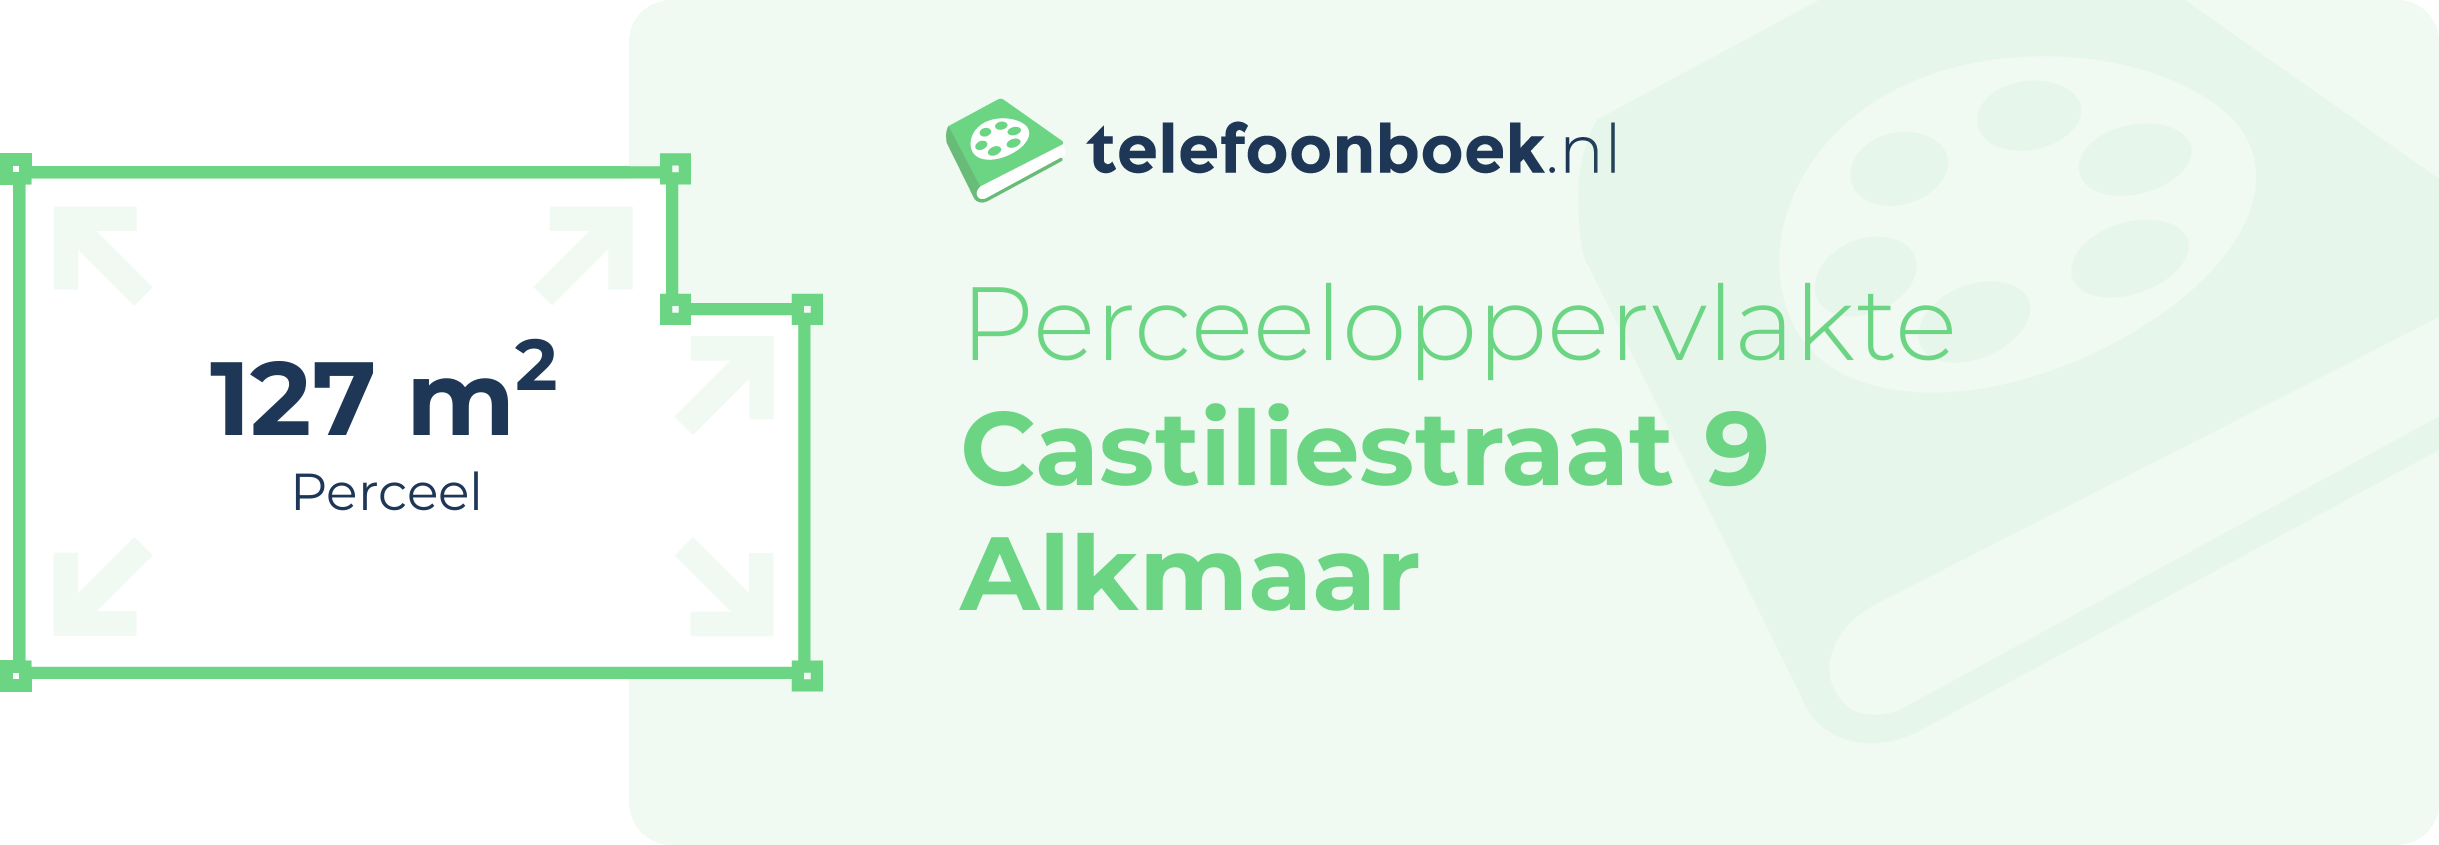 Perceeloppervlakte Castiliestraat 9 Alkmaar